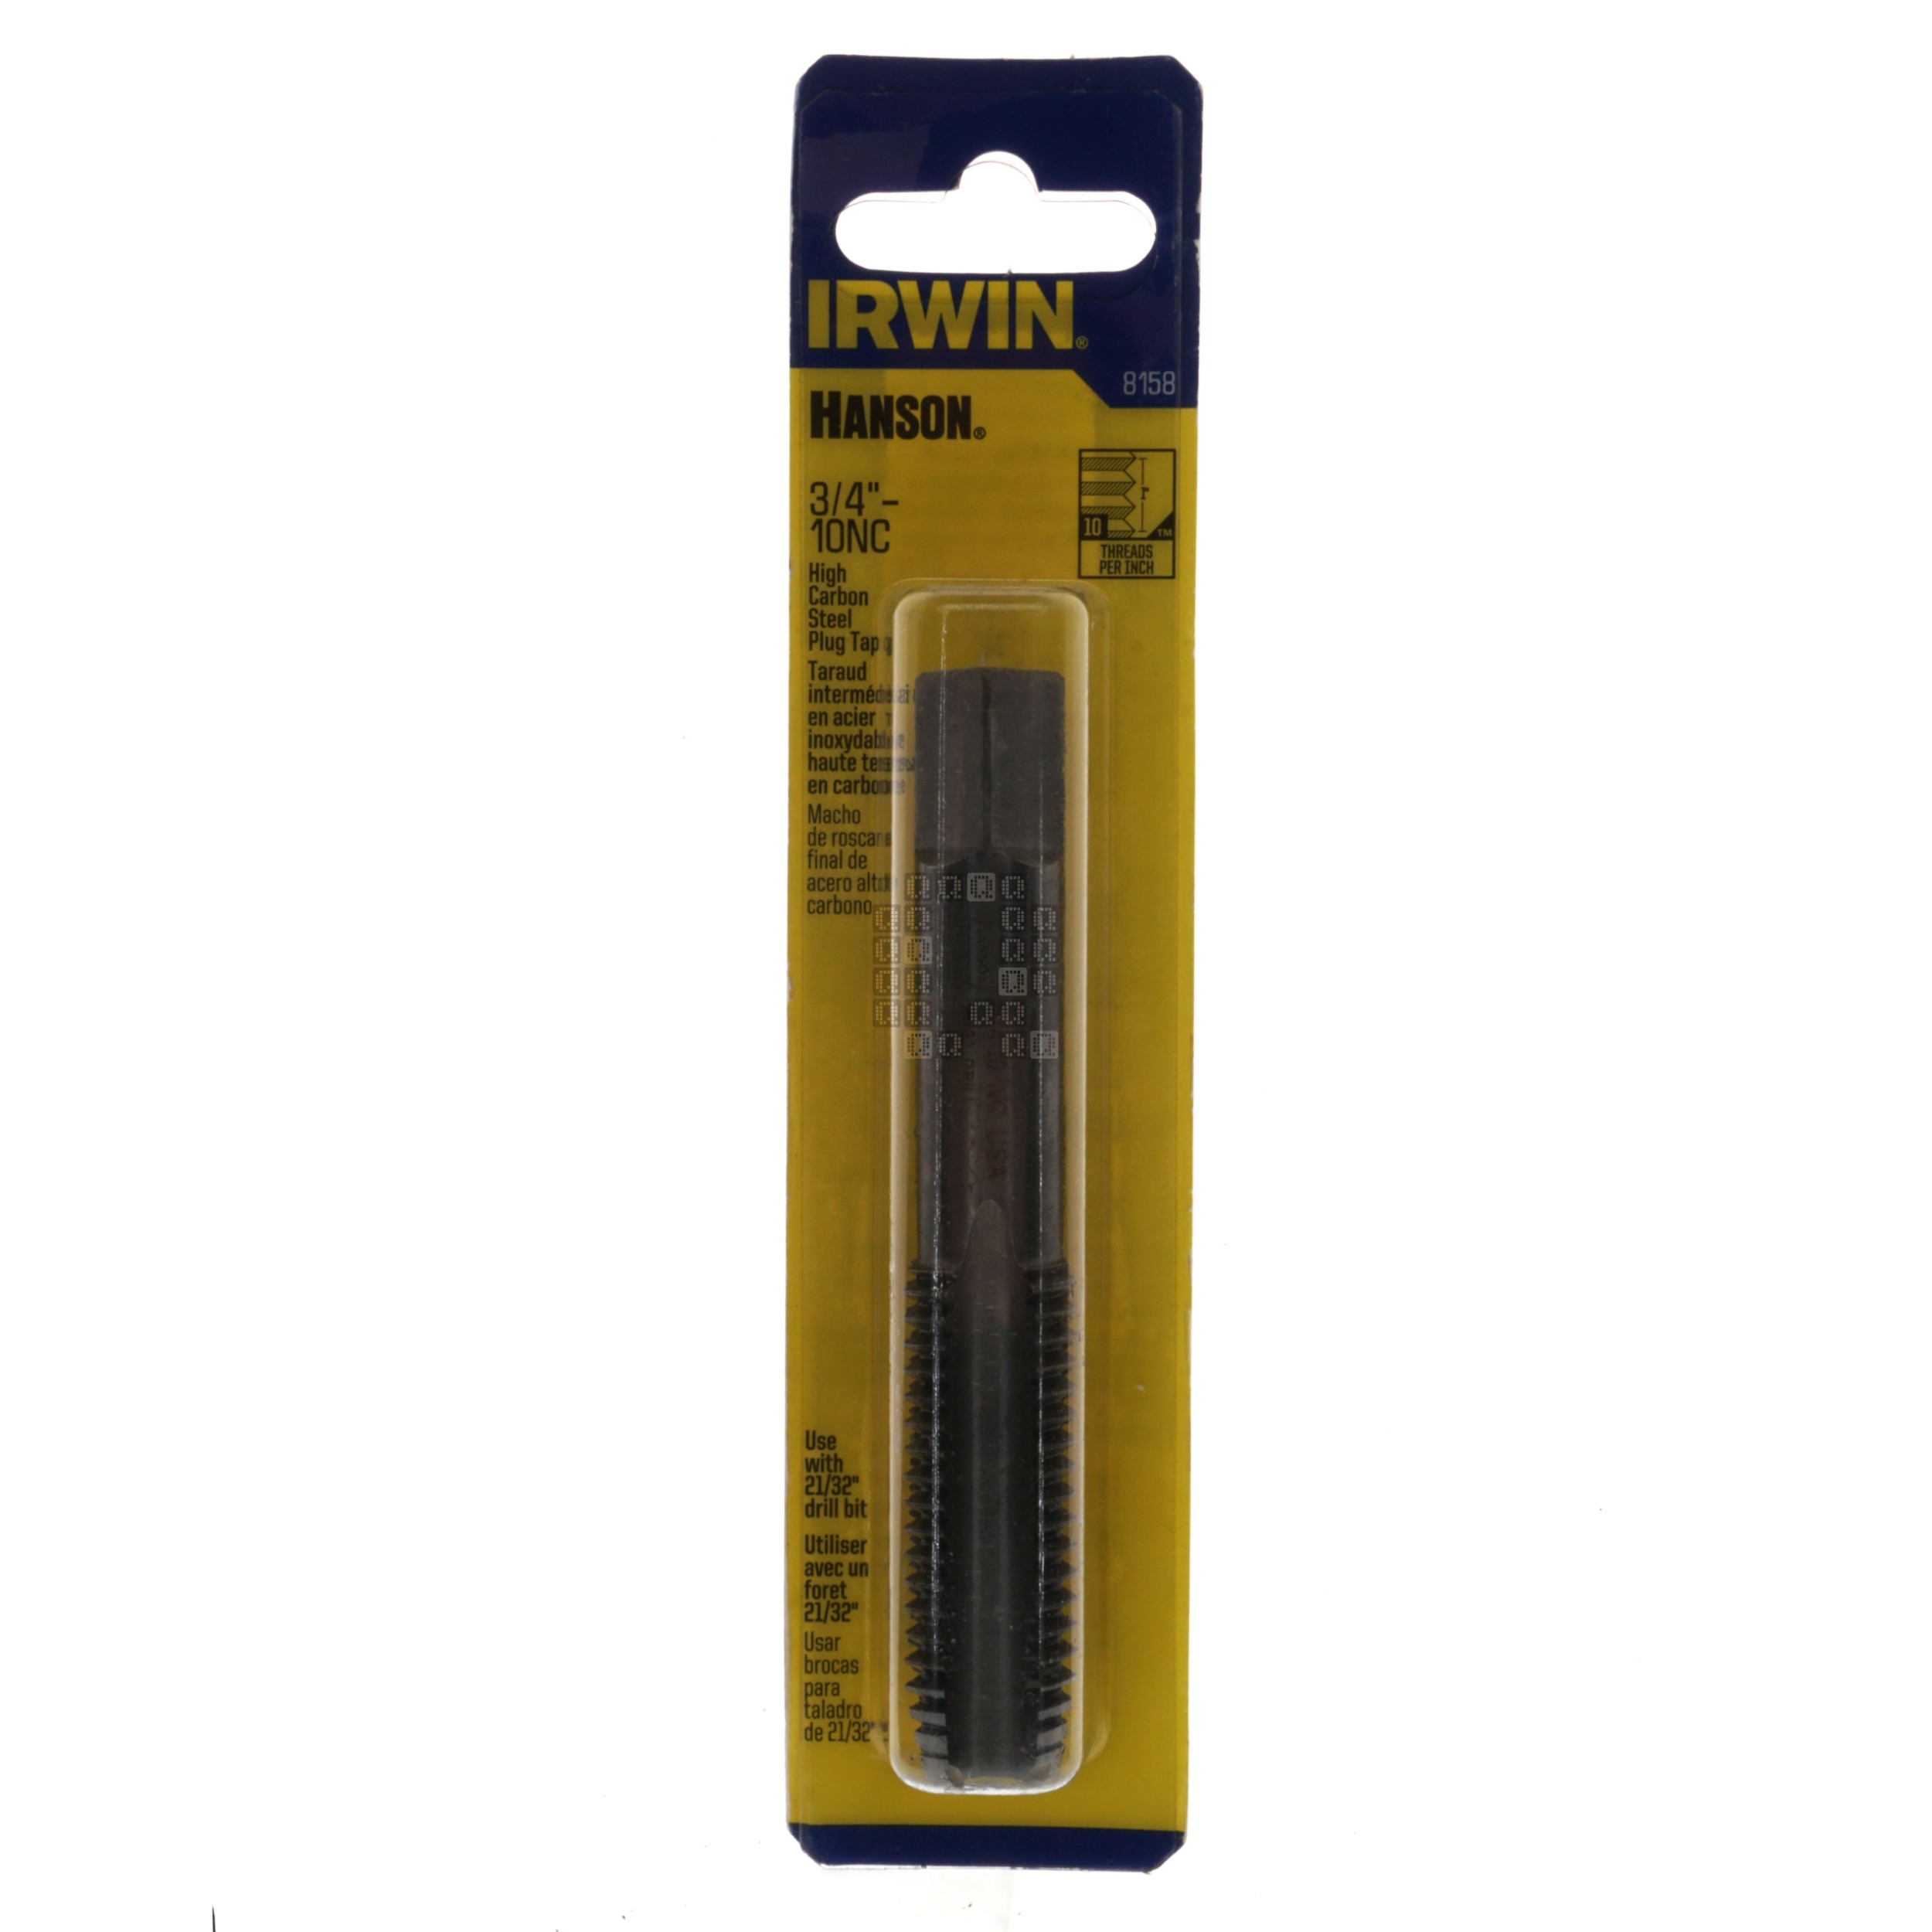 Irwin Hanson 8158 3/4"-10NC High Carbon Steel Plug Tap